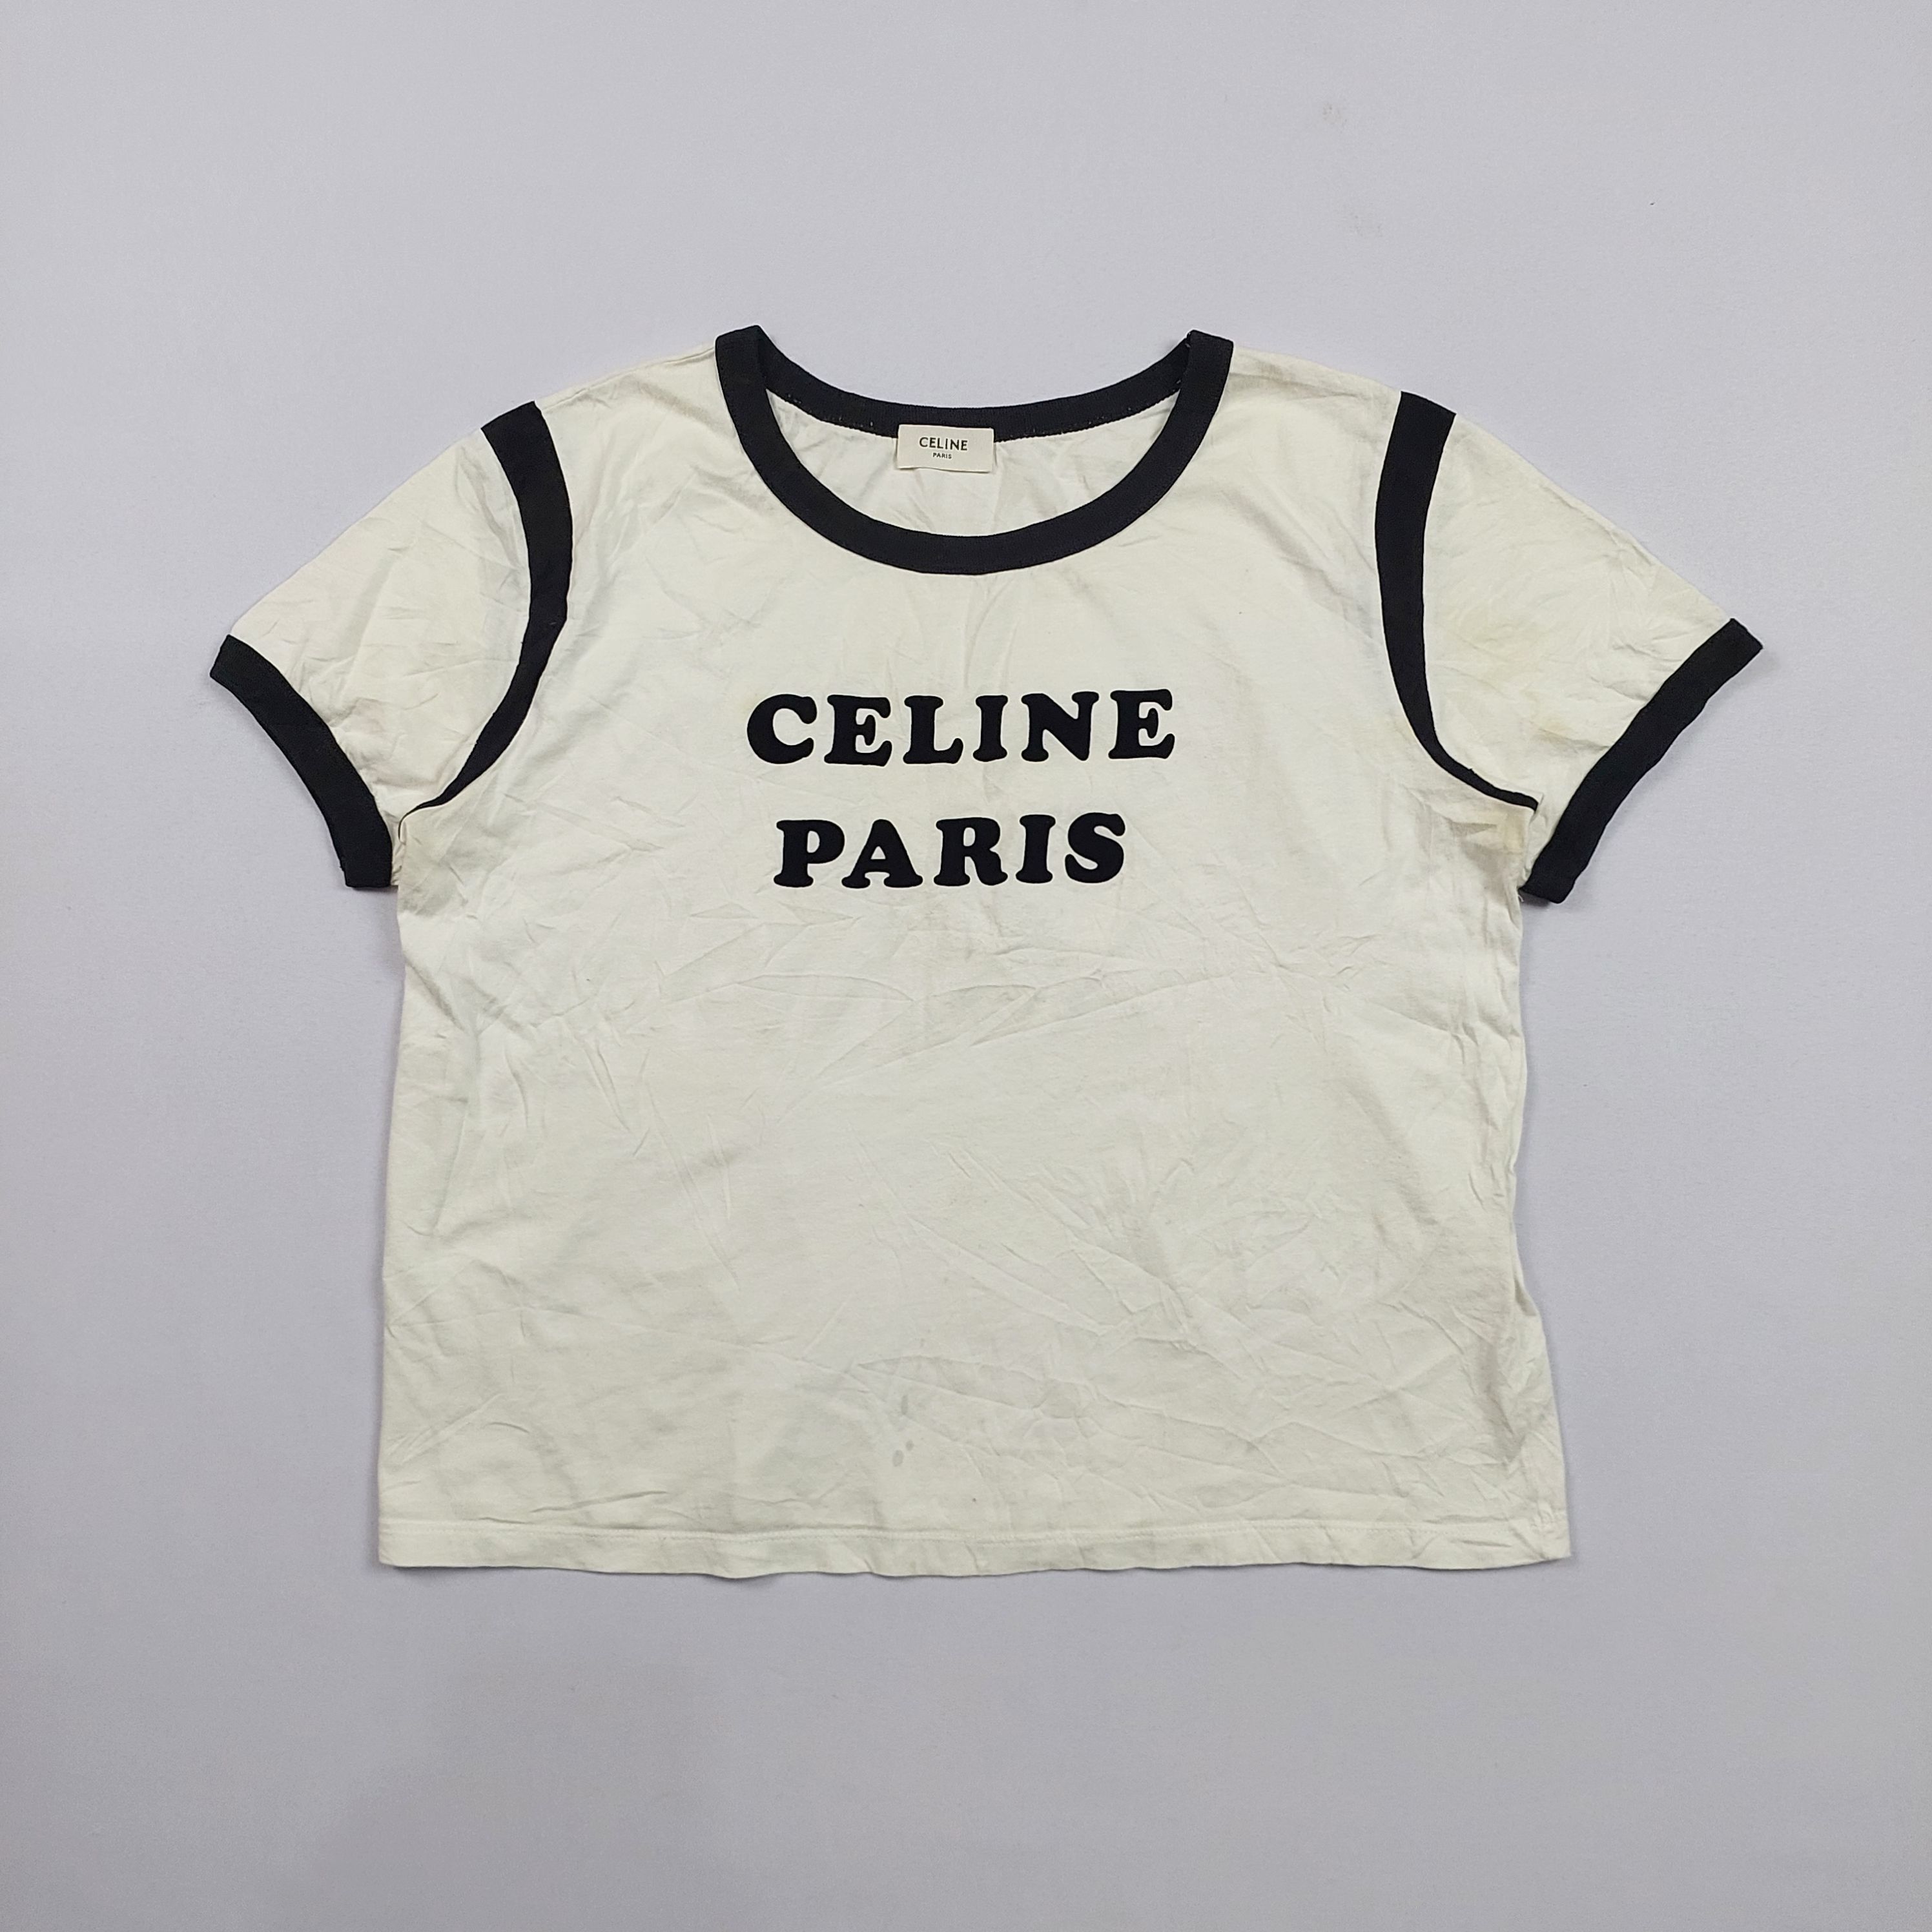 Celine - Graphic Print - Shirt - 1